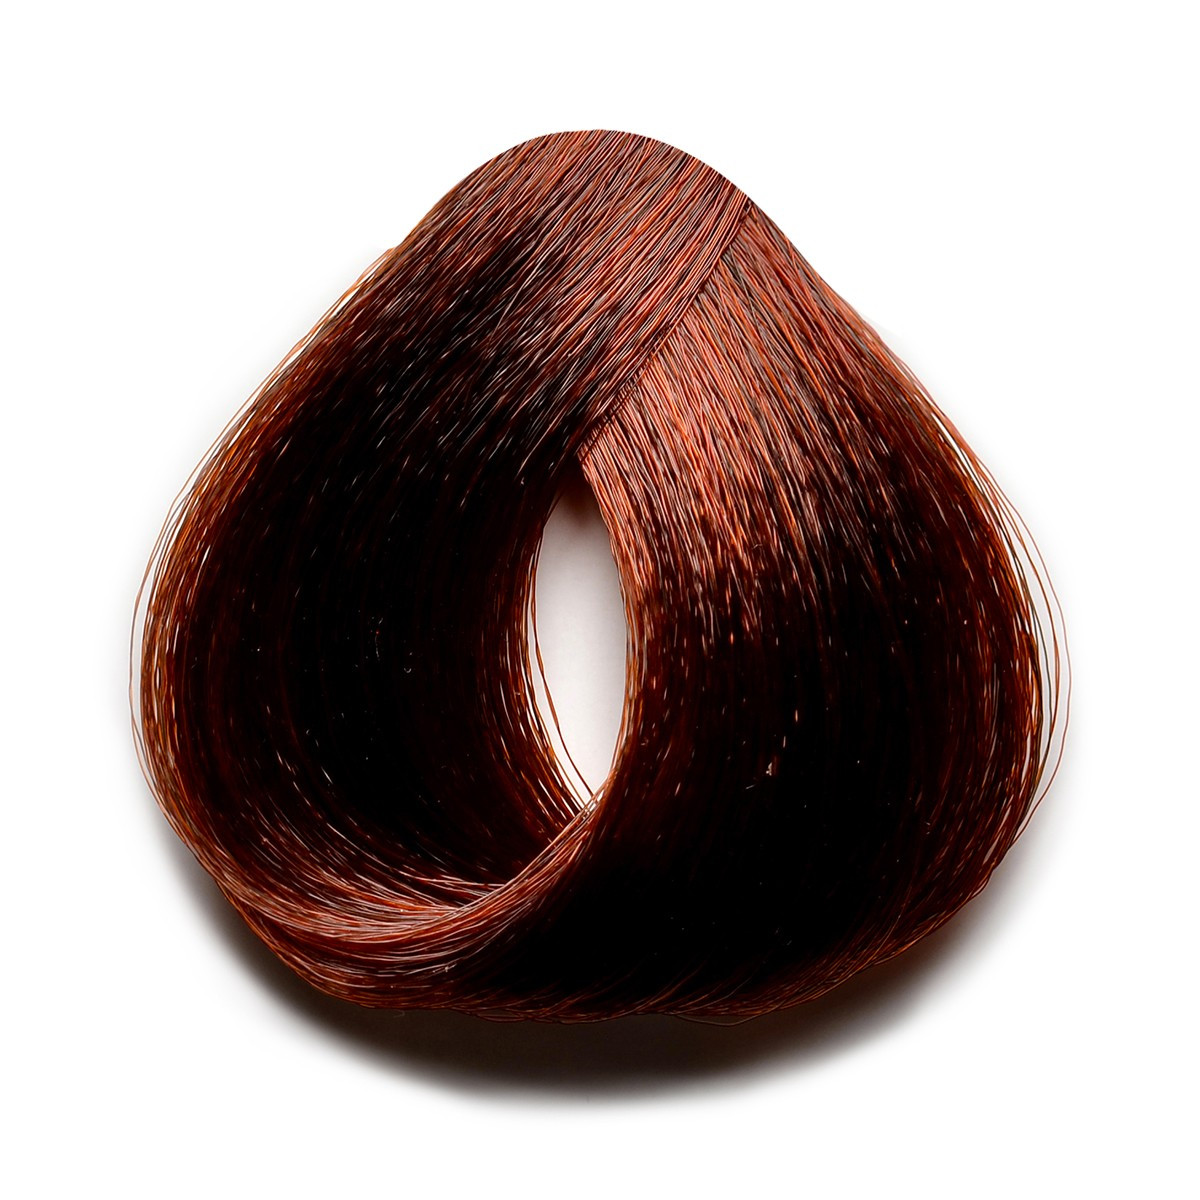 Капус краска для волос цвет махагон